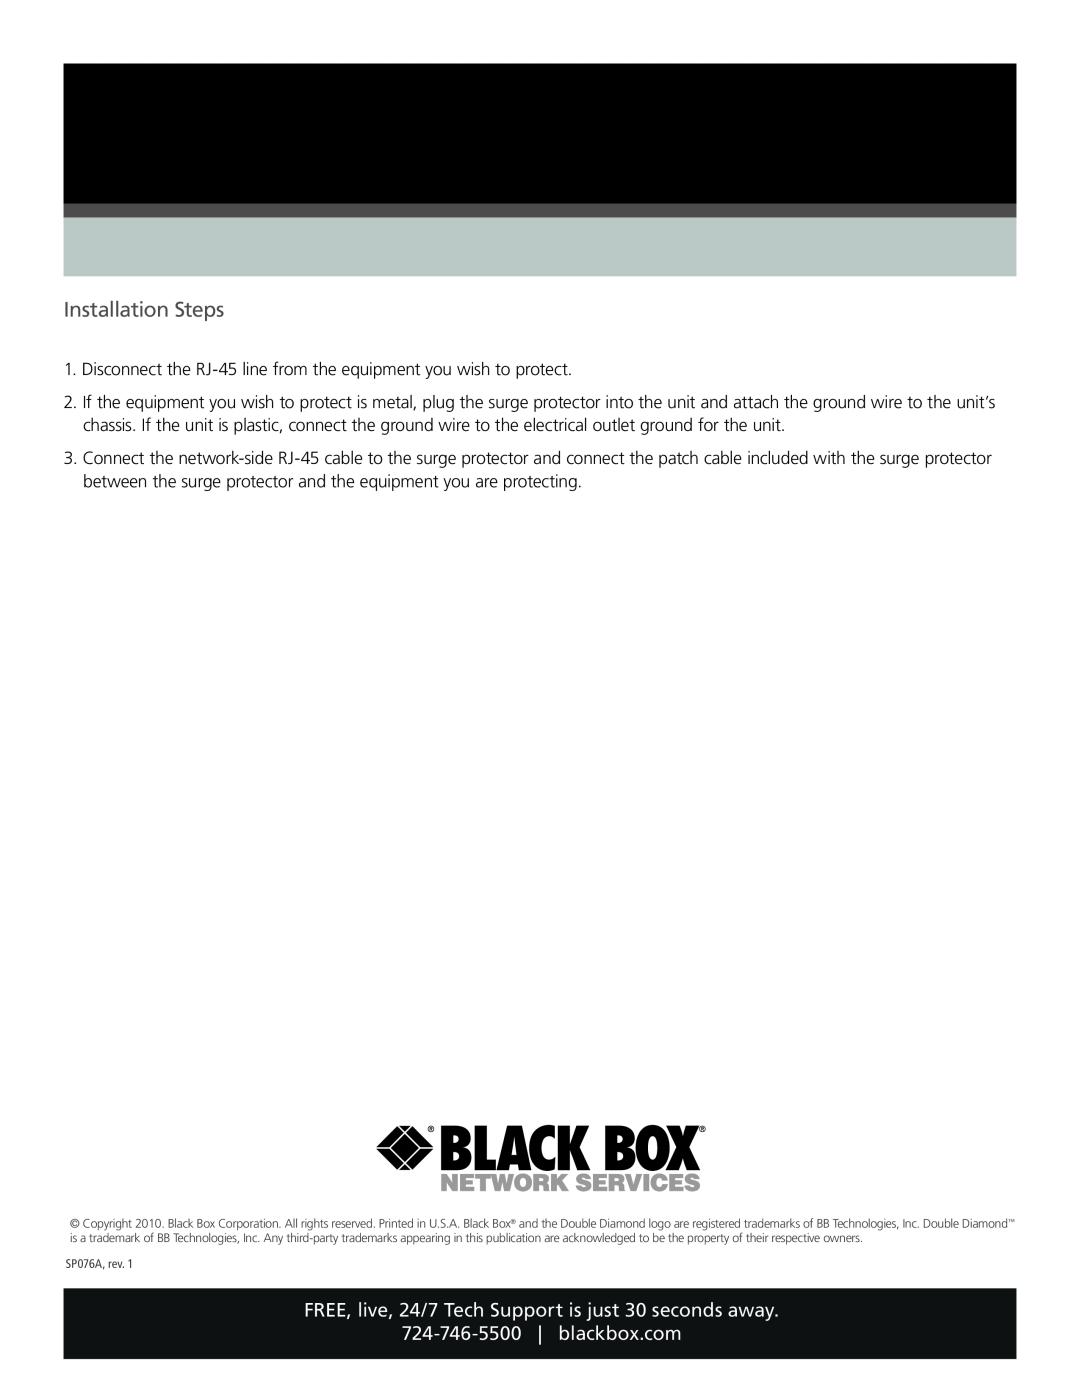 Black Box MT1000A-85-R4 specifications Installation Steps, 724-746-5500| blackbox.com 